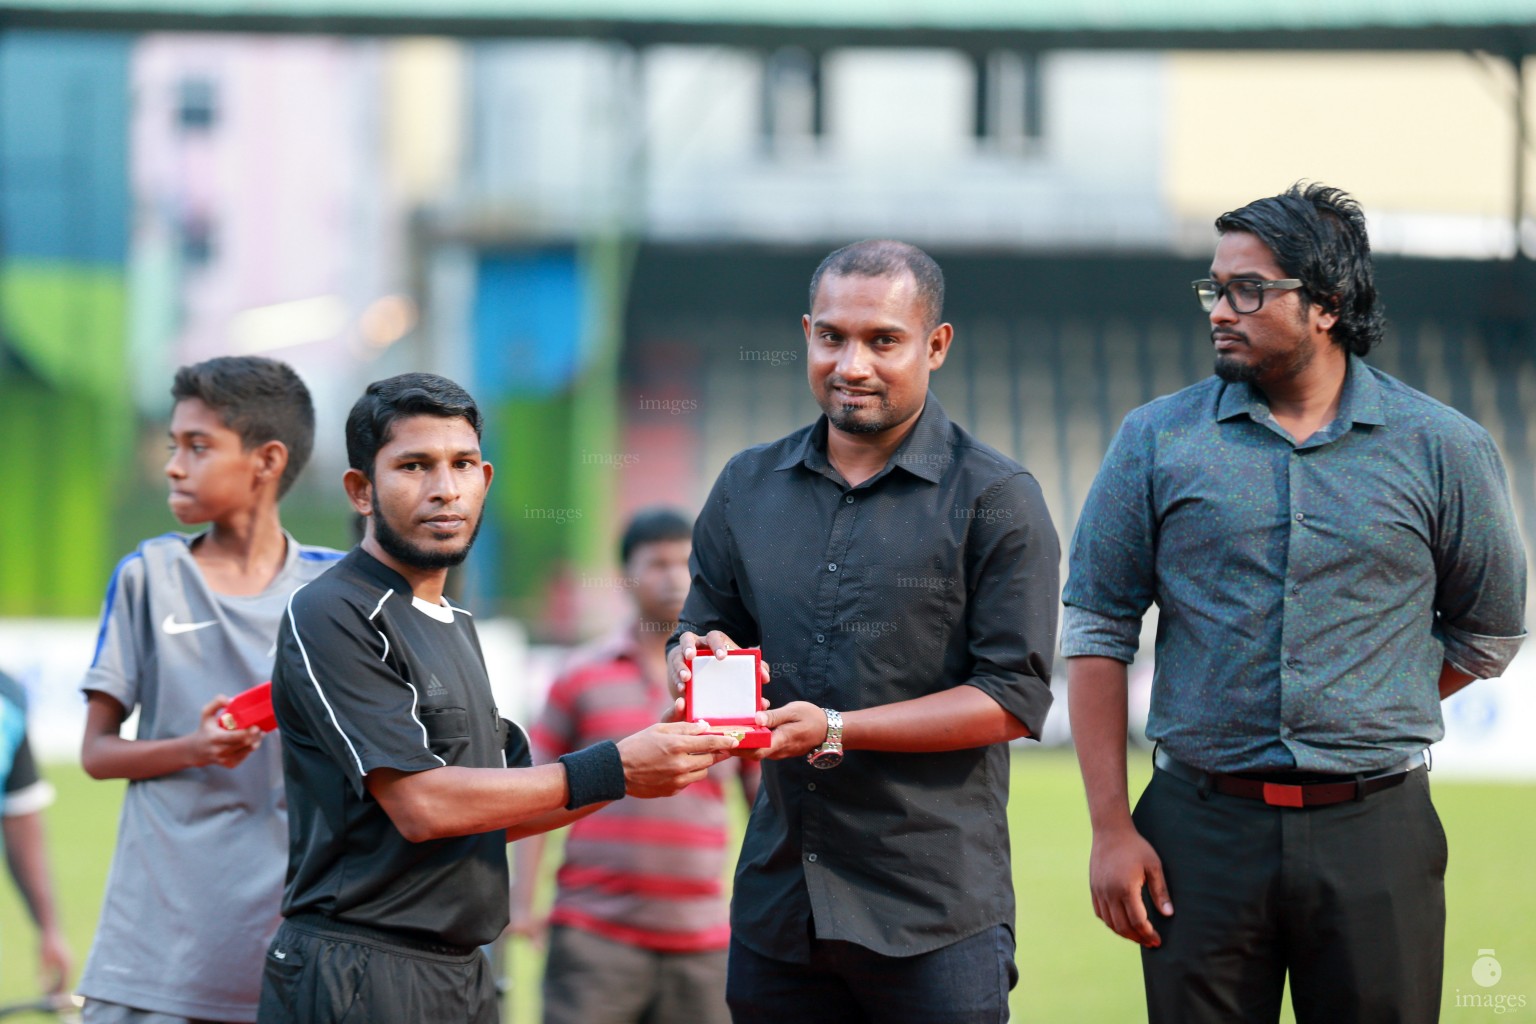 Football Association of Maldives Charity Shield Match between Maziya Sports and Recreation Club and Club Valencia in Male', Maldives, Wednesday, February 16, 2017. Maziya won the match by 1 - 0. (Images.mv Photo/ Hussain Sinan).